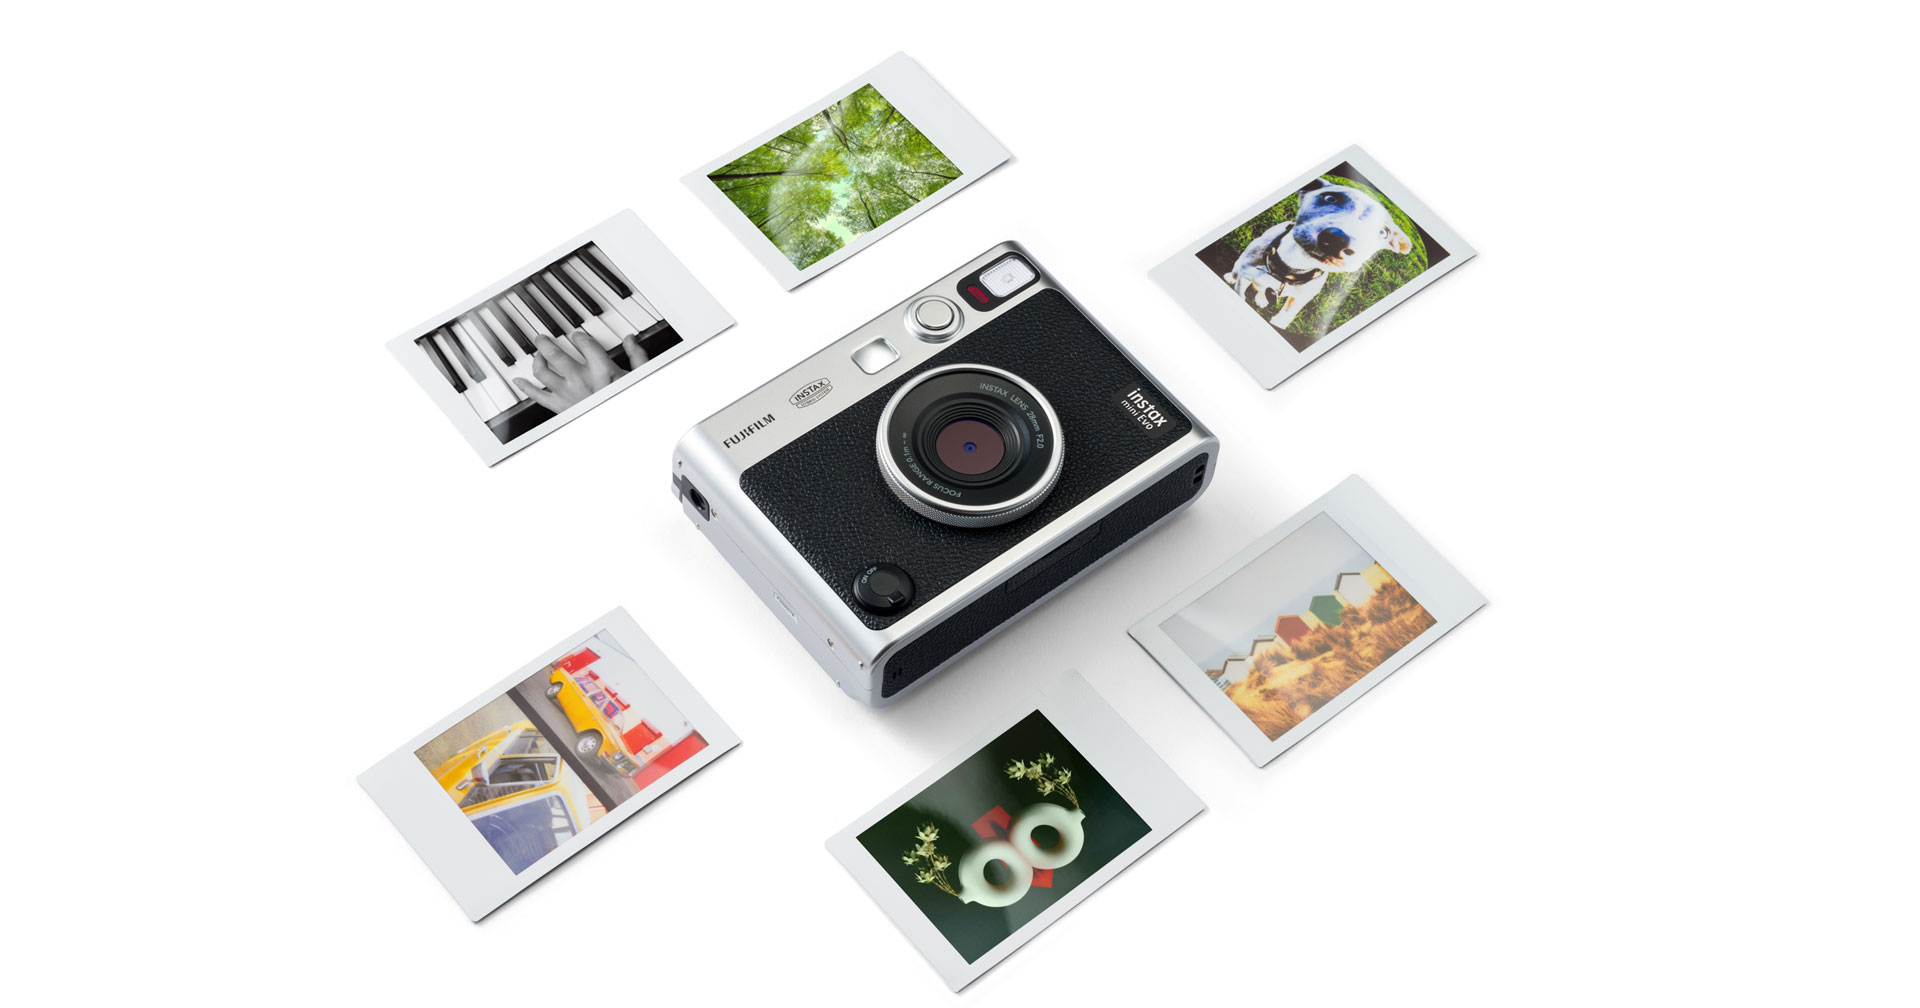 FUJIFILM กระโดดขึ้นที่ 1 ตลาดกล้อง Compact Digital ในญี่ปุ่น ด้วย ‘instax mini Evo’